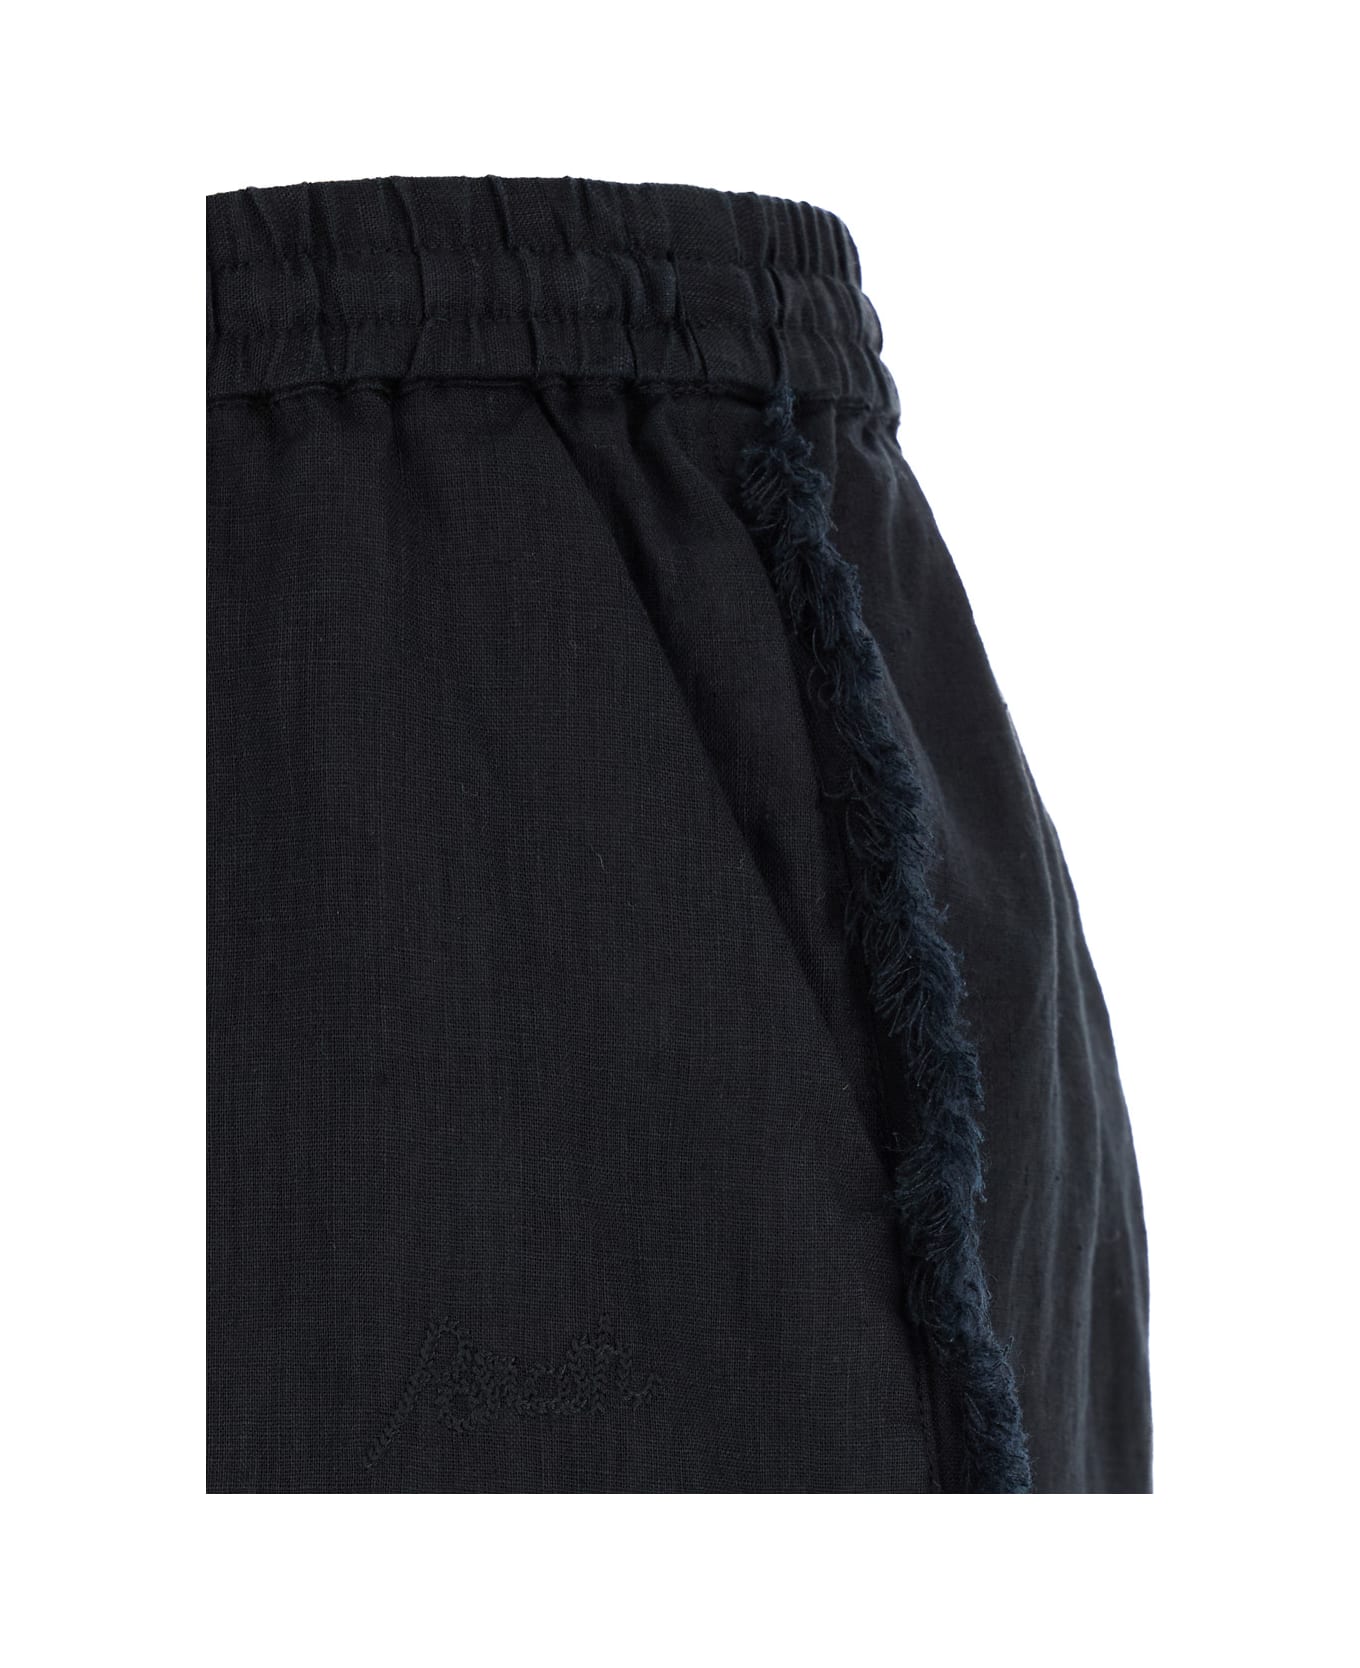 Parosh Black Shorts With Drawstring And Fringed Hem In Linen Woman - Black